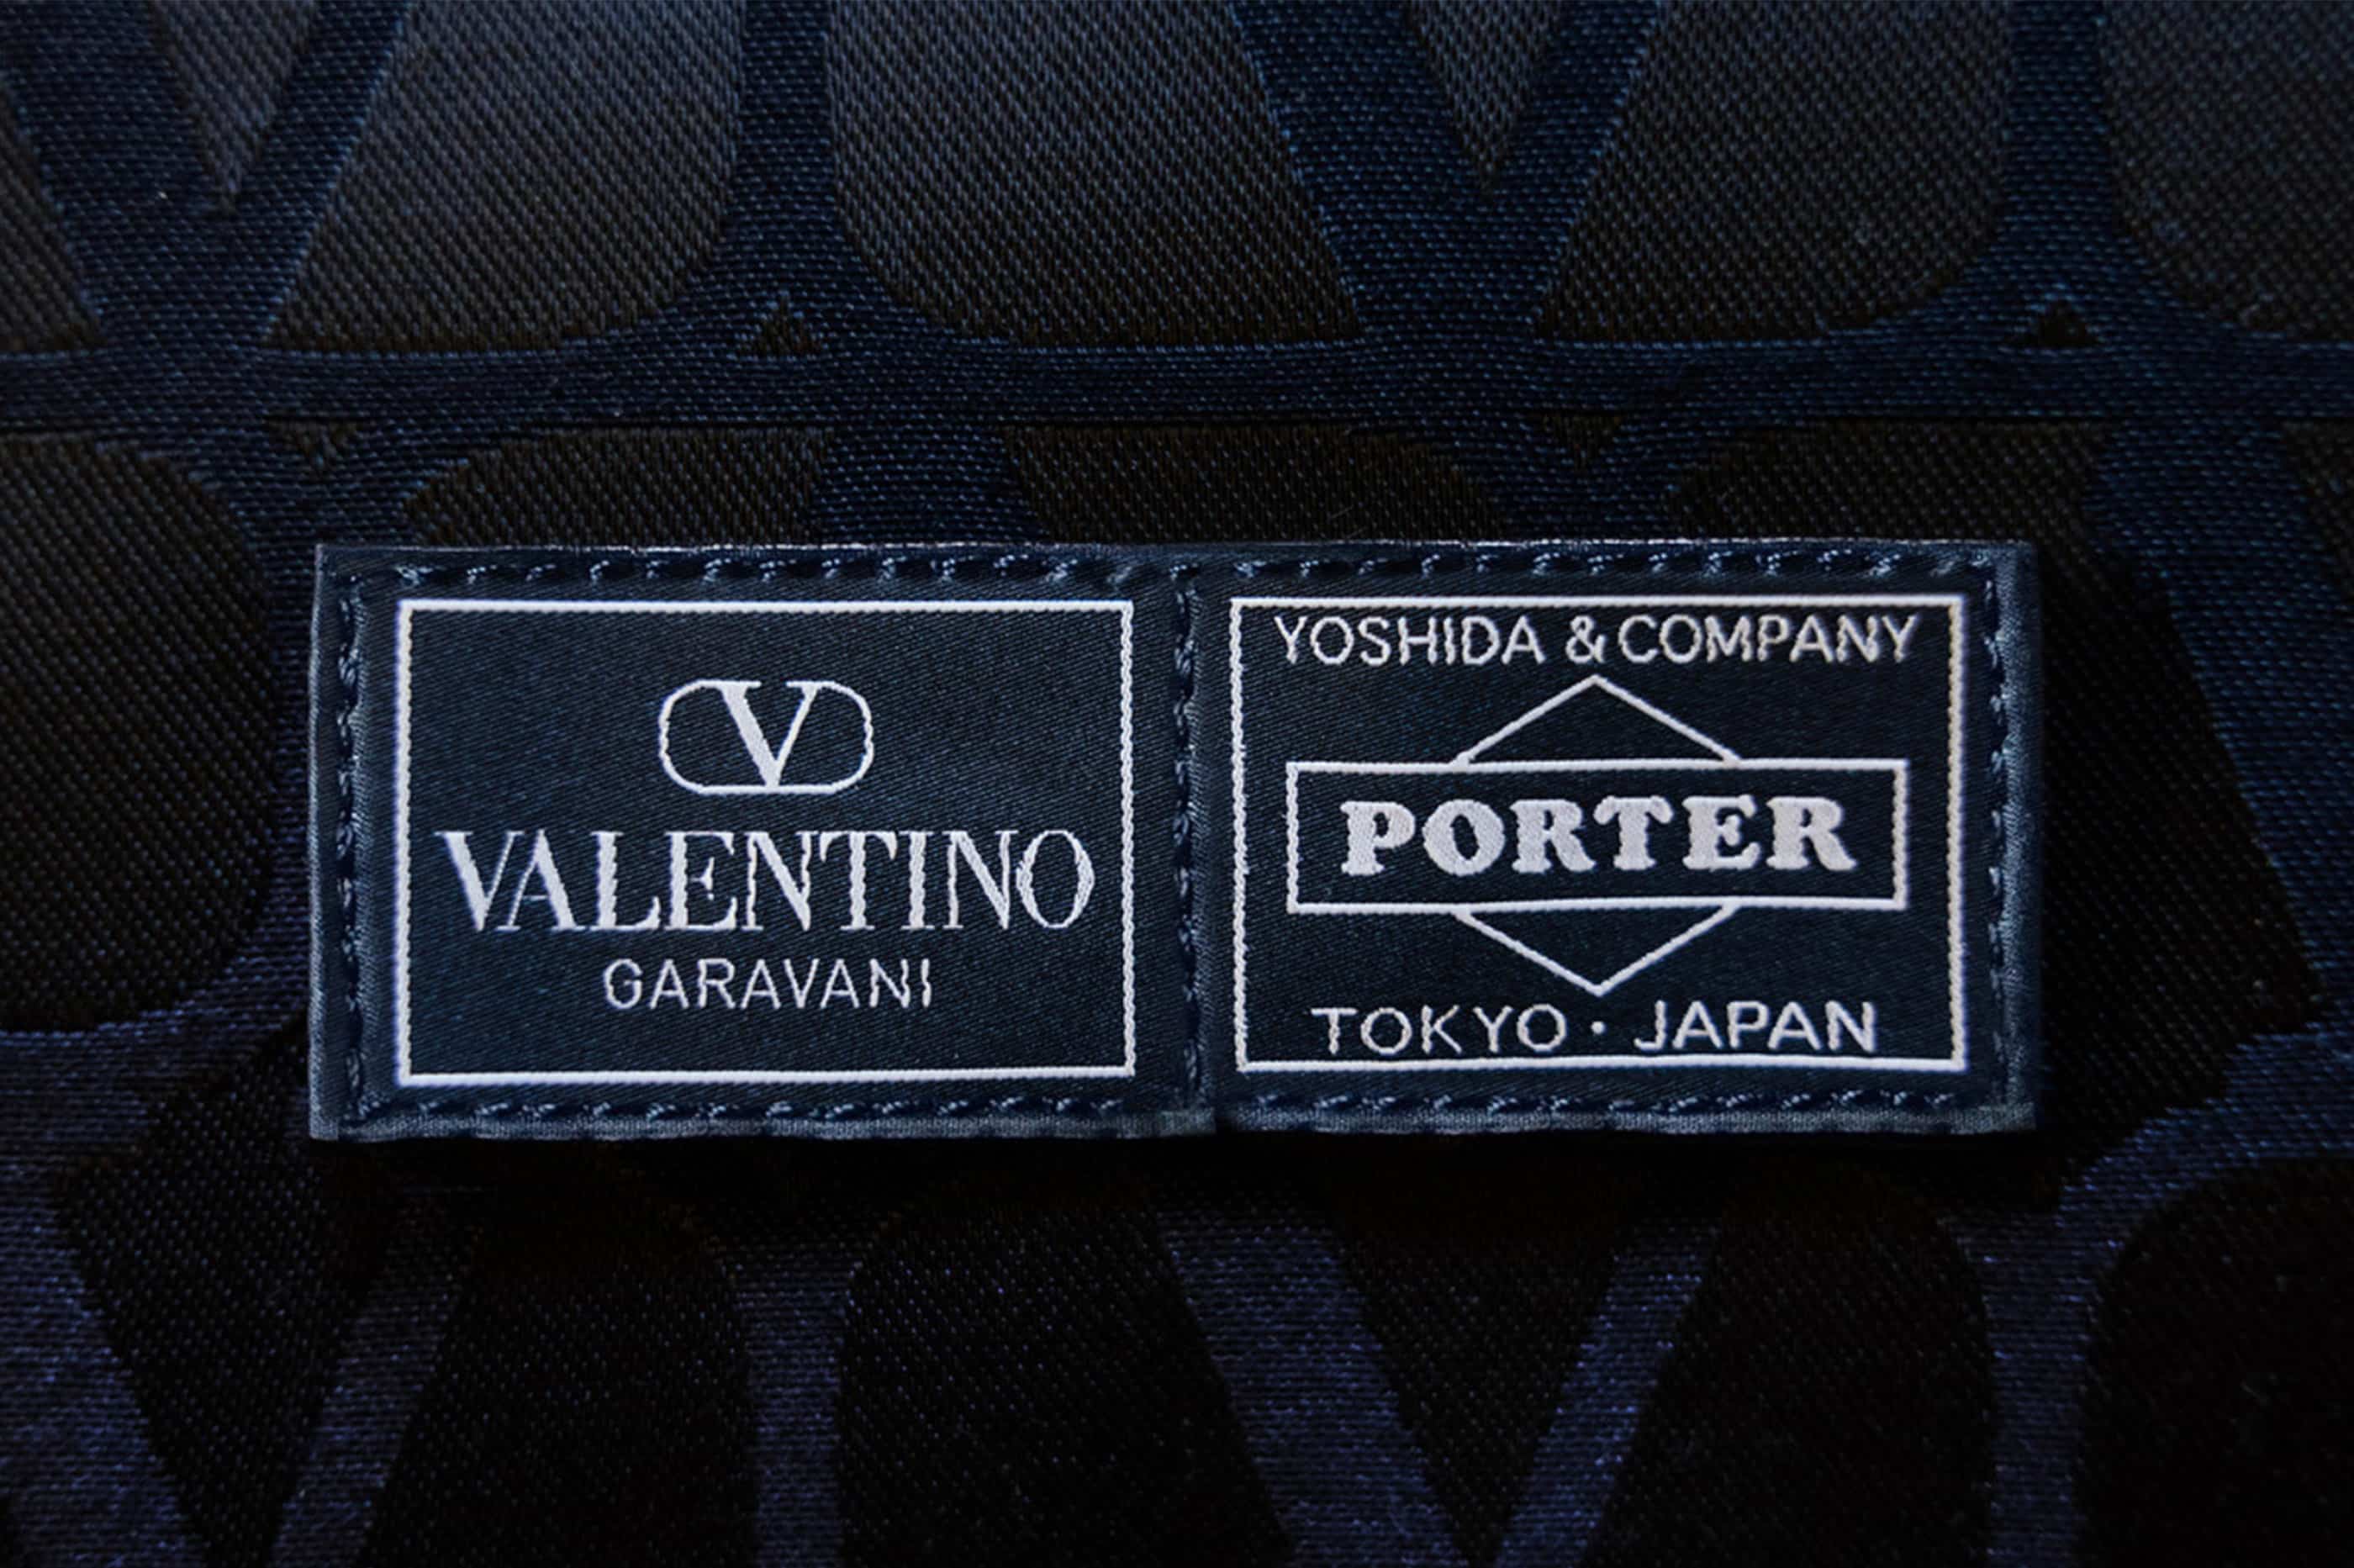 Valentino Garavani x Porter collaboration